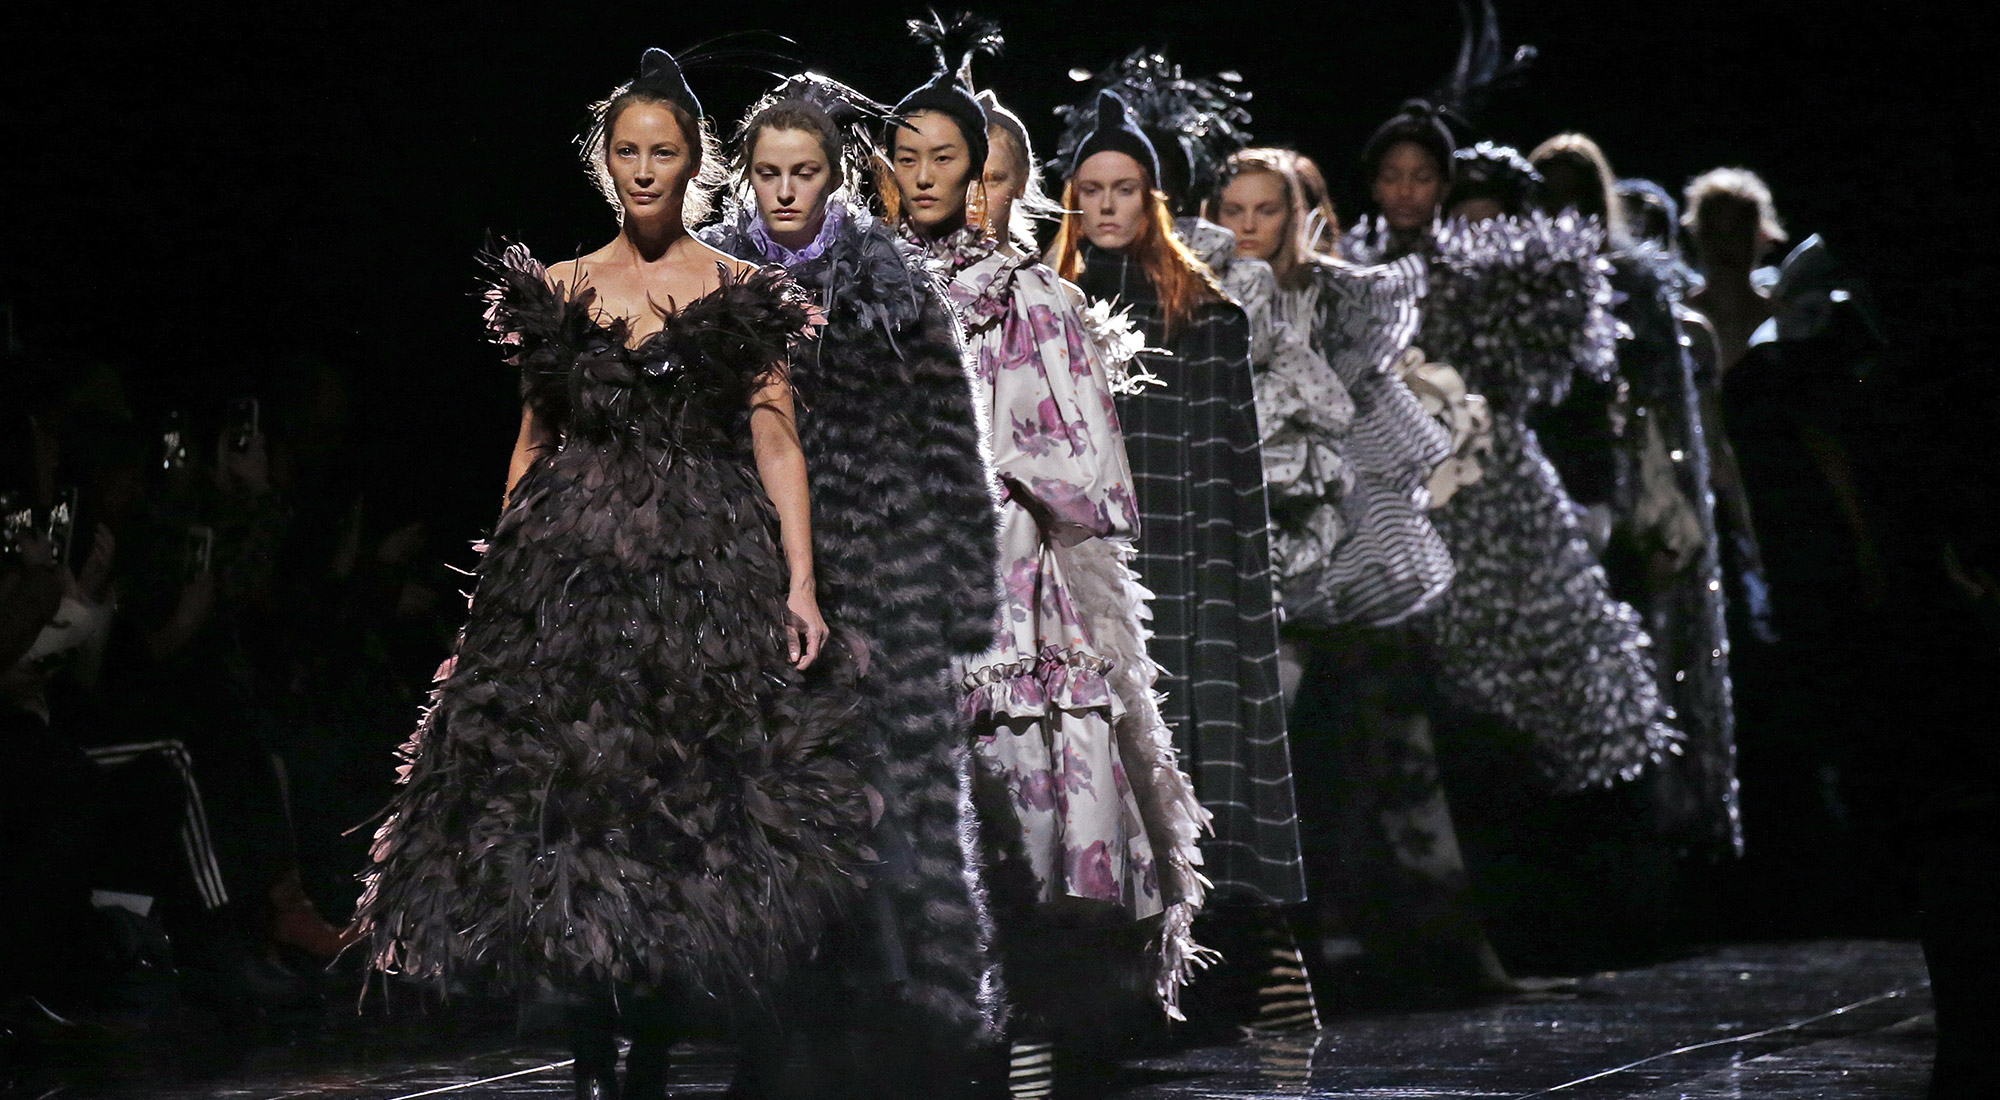 Marc Jacobs for Louis Vuitton at Paris fashion week, Fashion